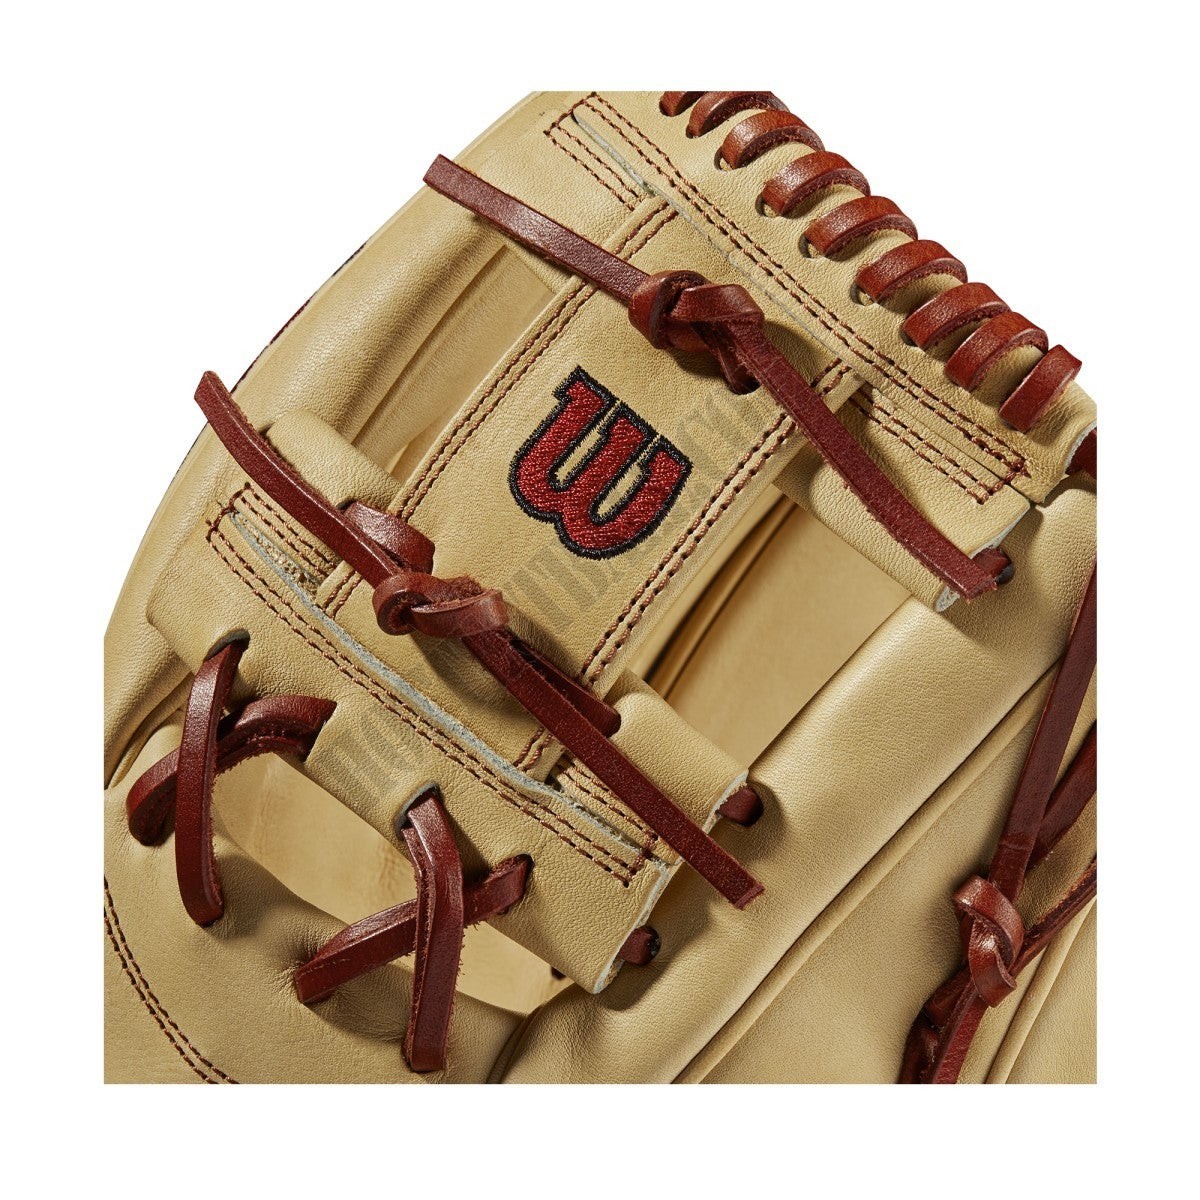 2021 A2000 1787 11.75" Infield Baseball Glove ● Wilson Promotions - -5